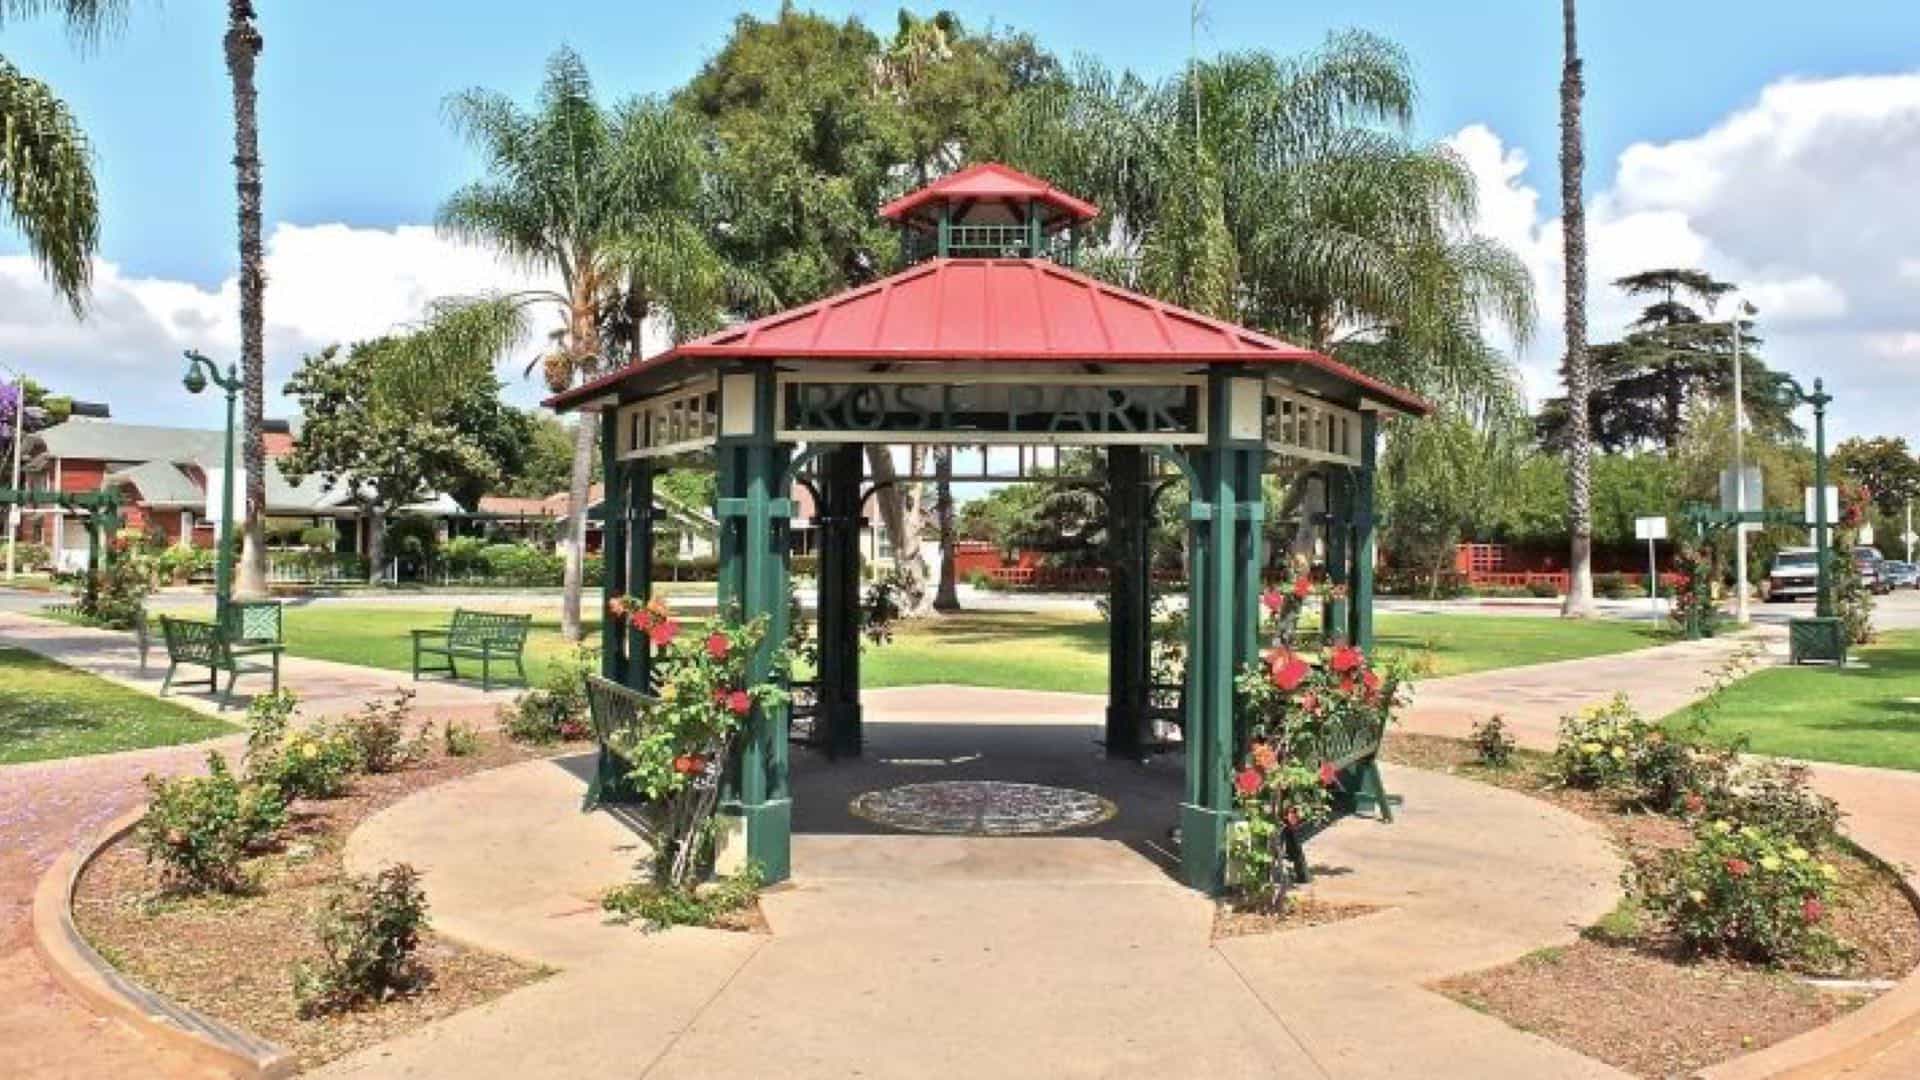 Rose Park gazebo, Long Beach, CA